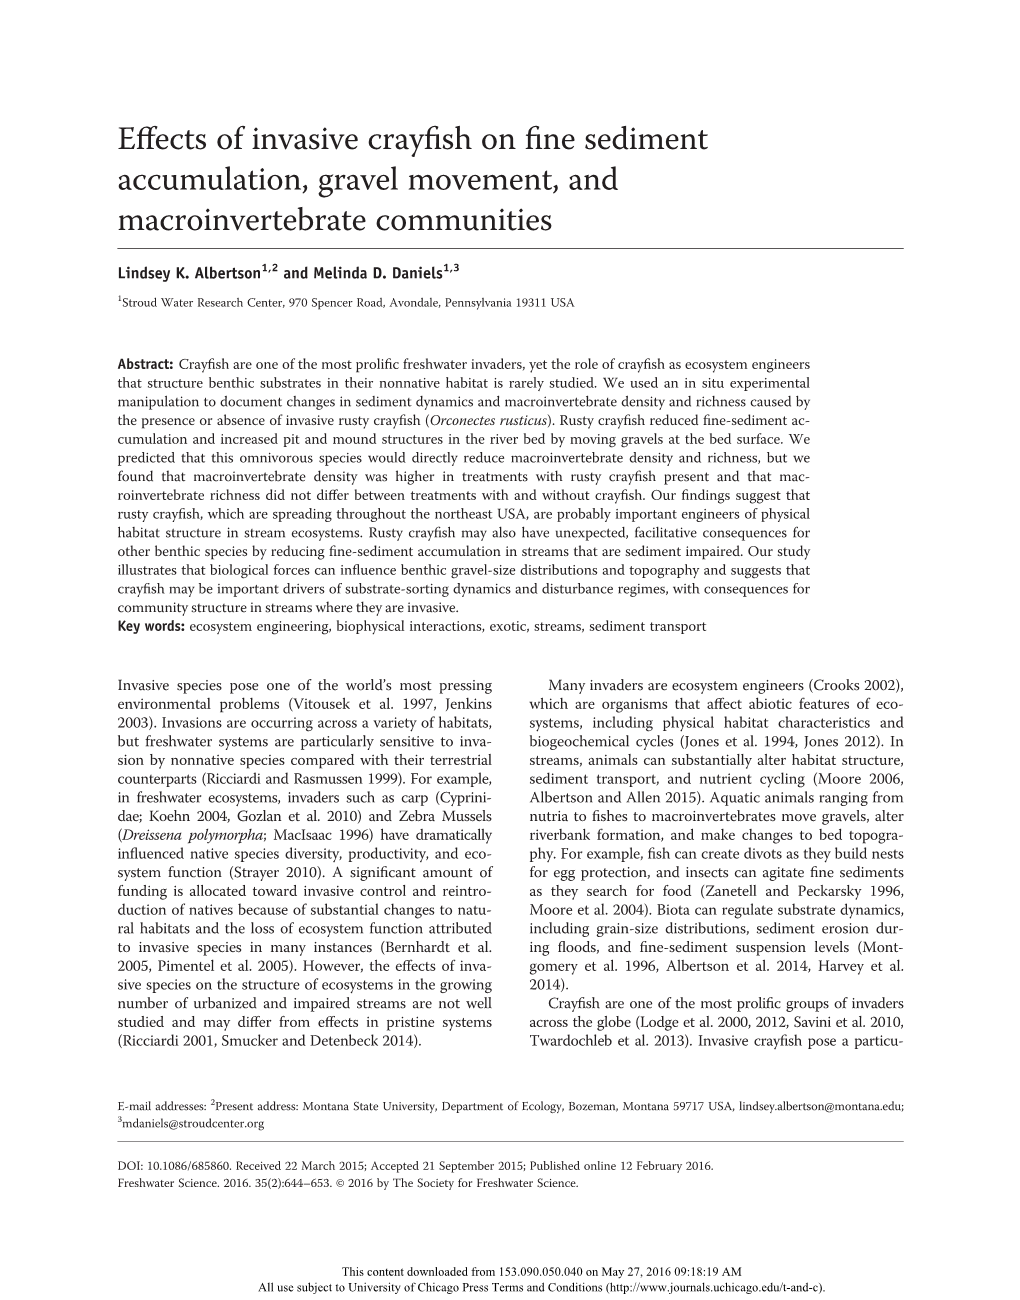 Effects of Invasive Crayfish on Fine Sediment Accumulation, Gravel